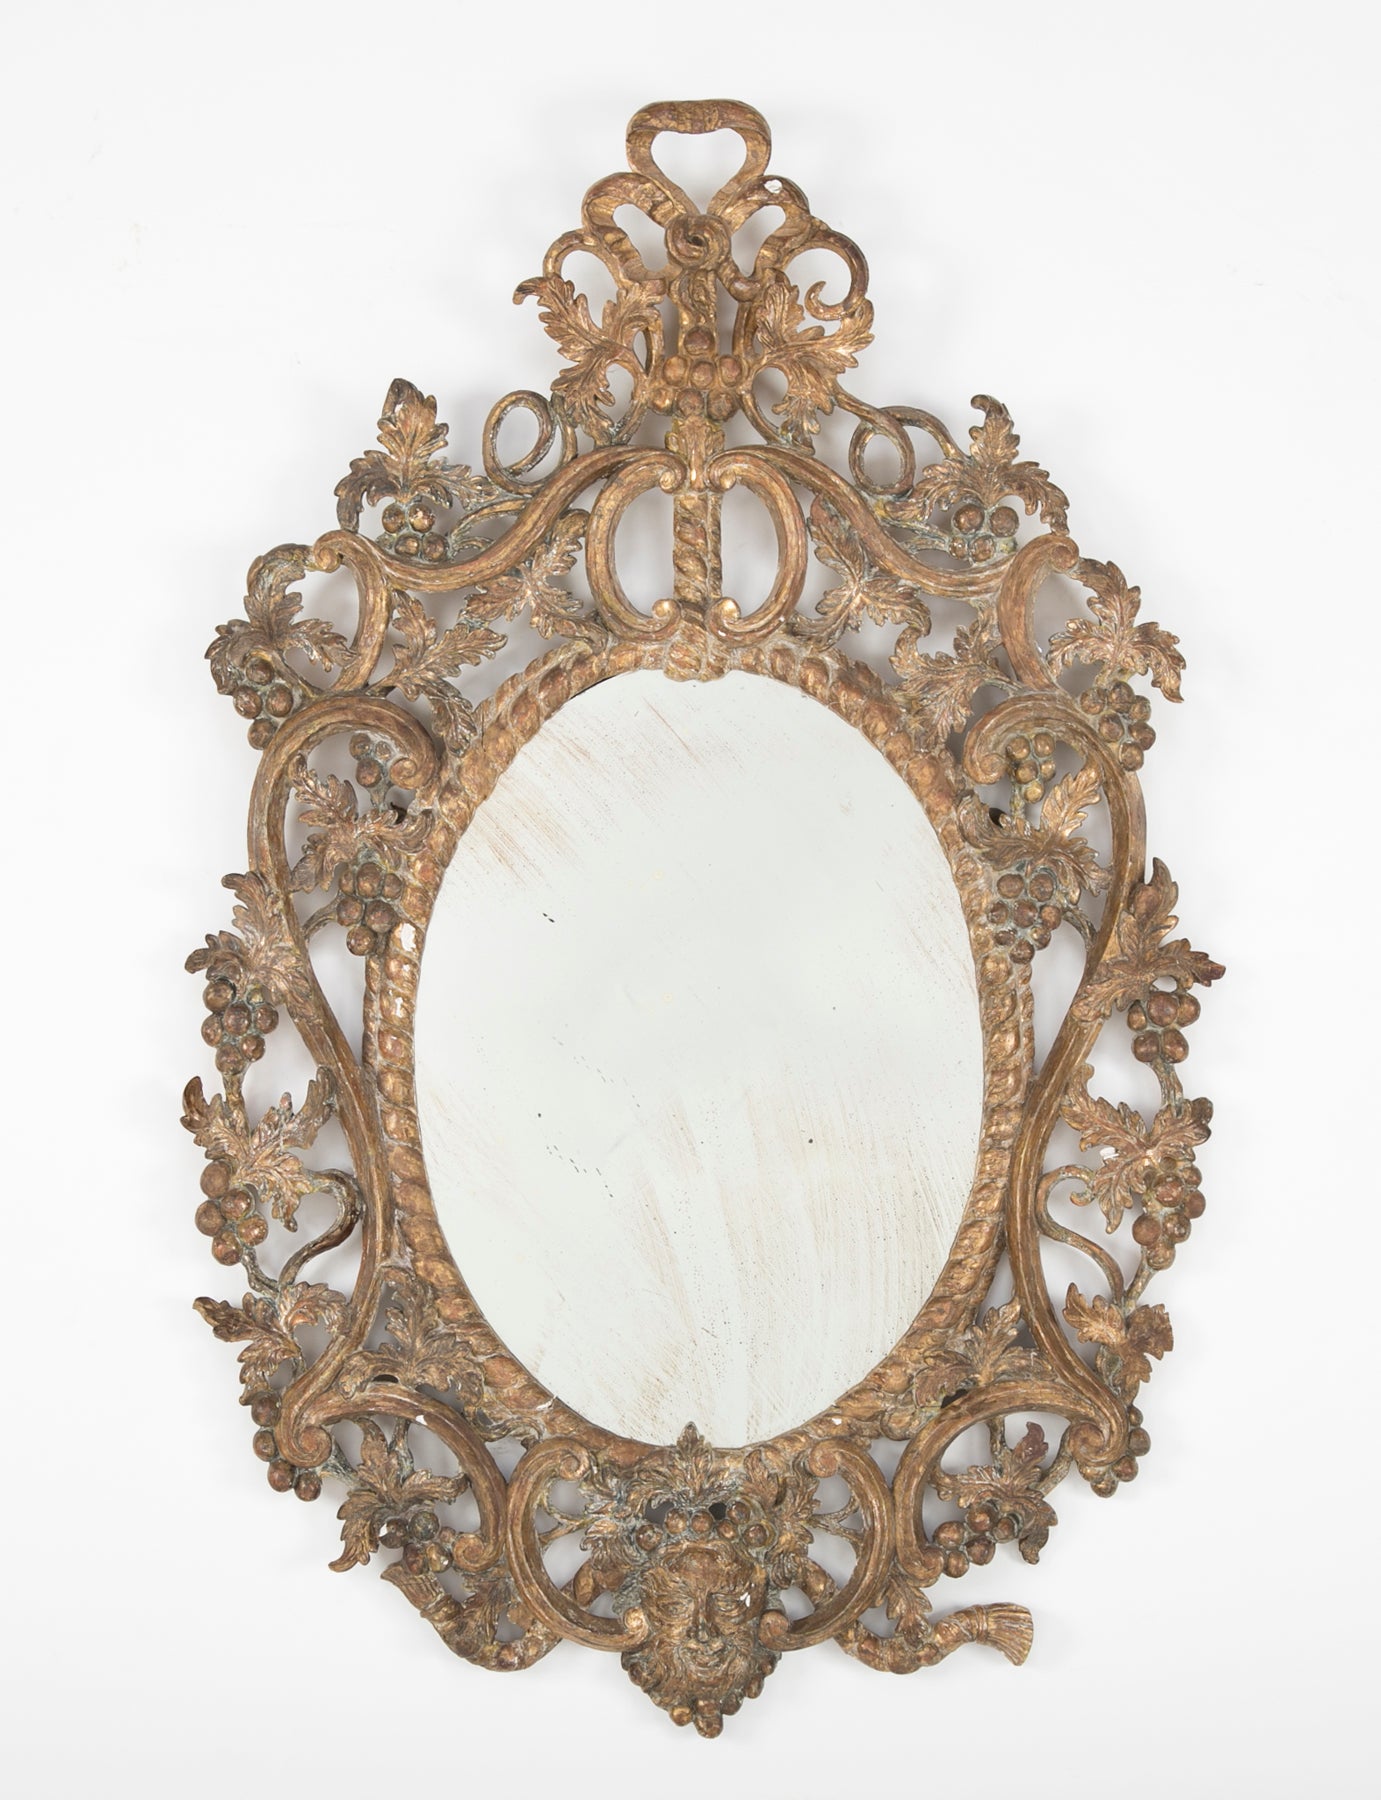 George I Period Mirror with Grape Vine Motif Frame